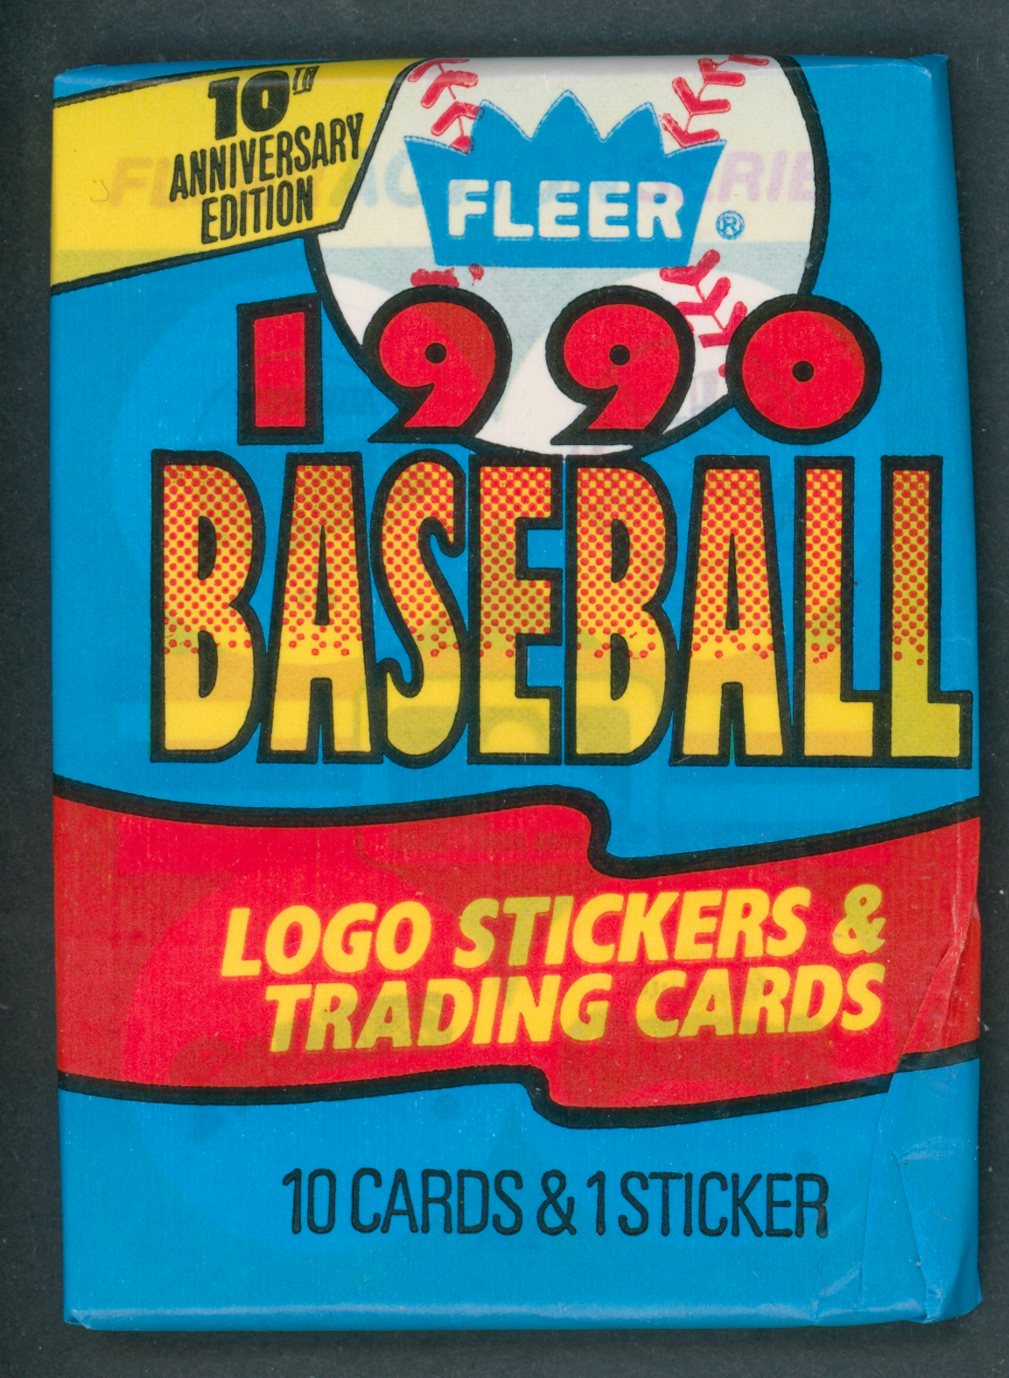 1990 Fleer Baseball Unopened Wax Pack (Canadian)